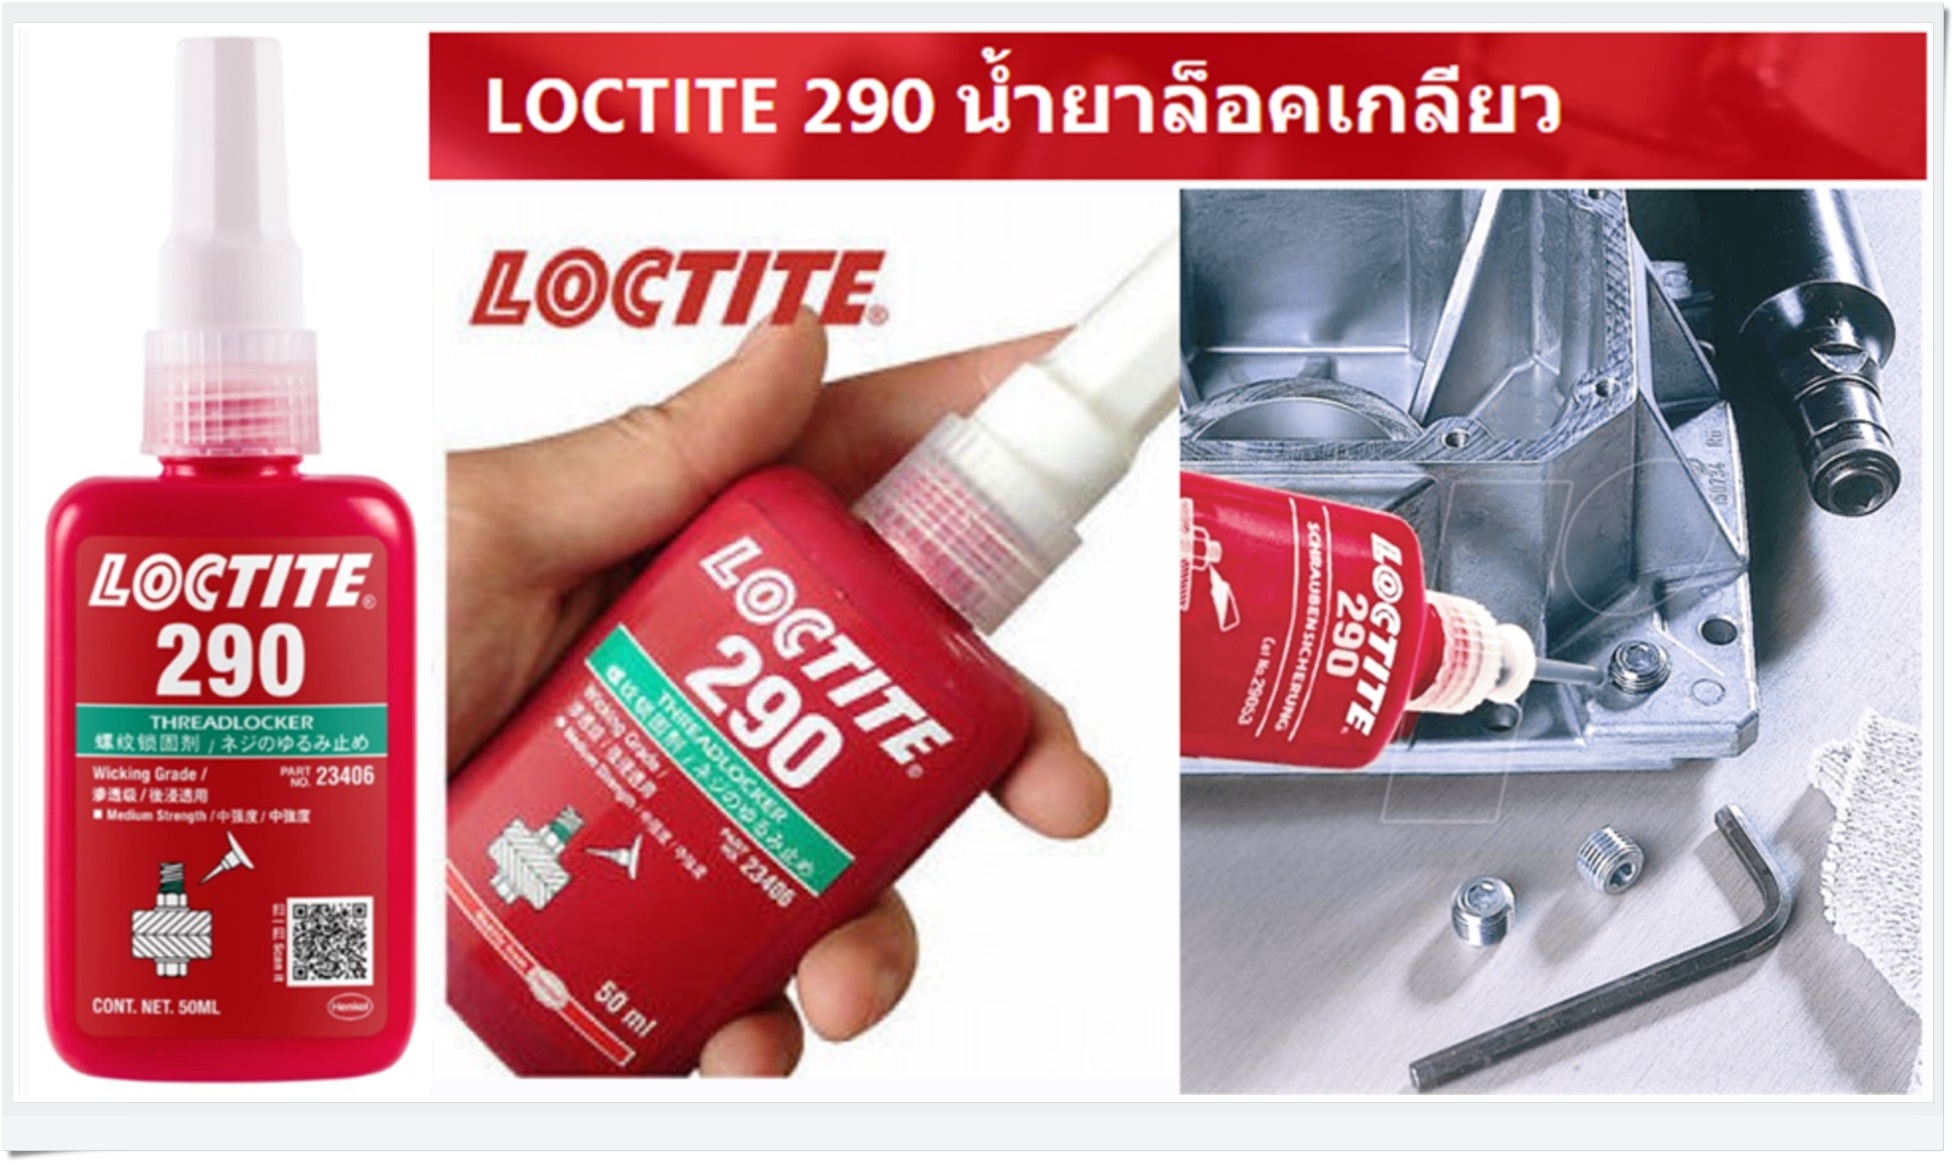 Loctite 290 (น้ำยาล็อคเกลี่ยว) Thread locking